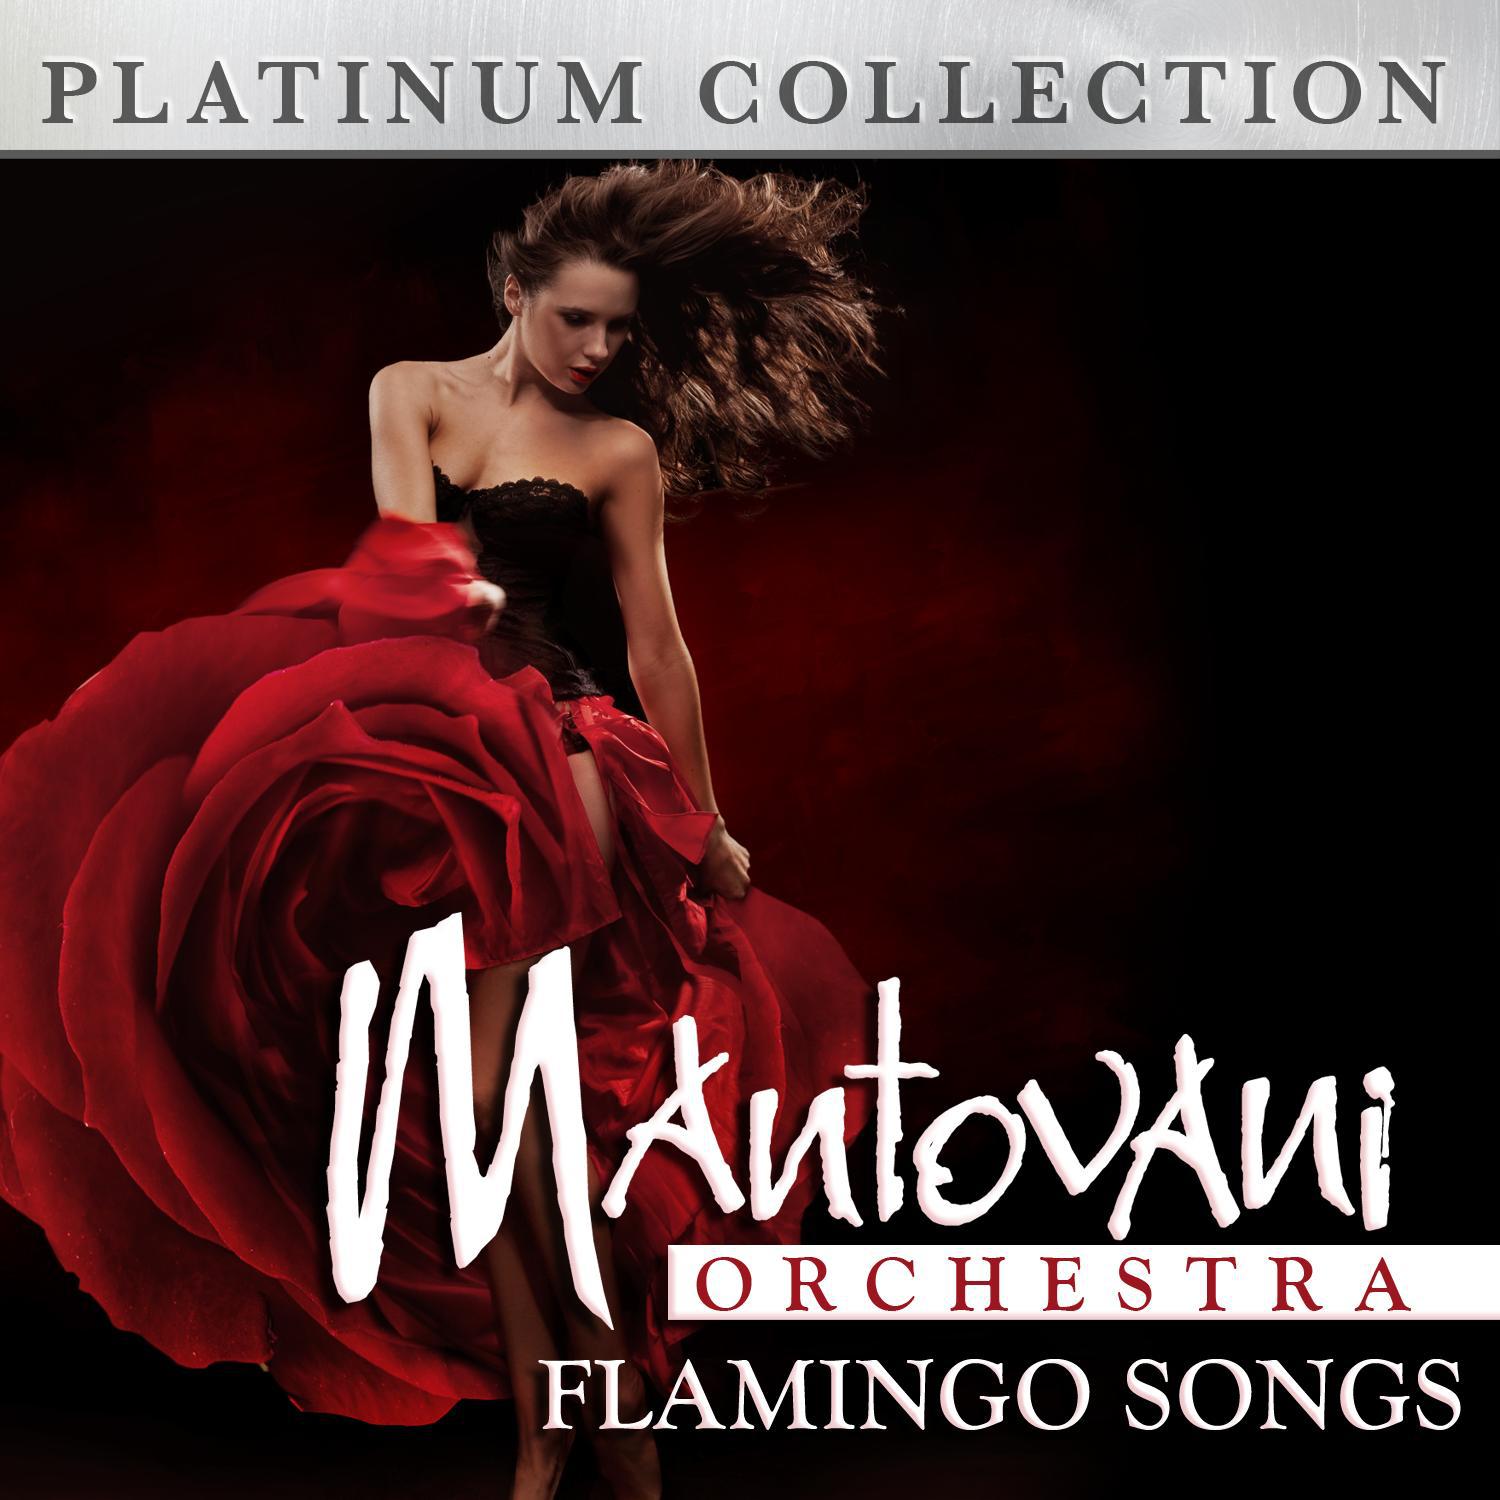 Mantovani Orchestra - Flamingo Songs